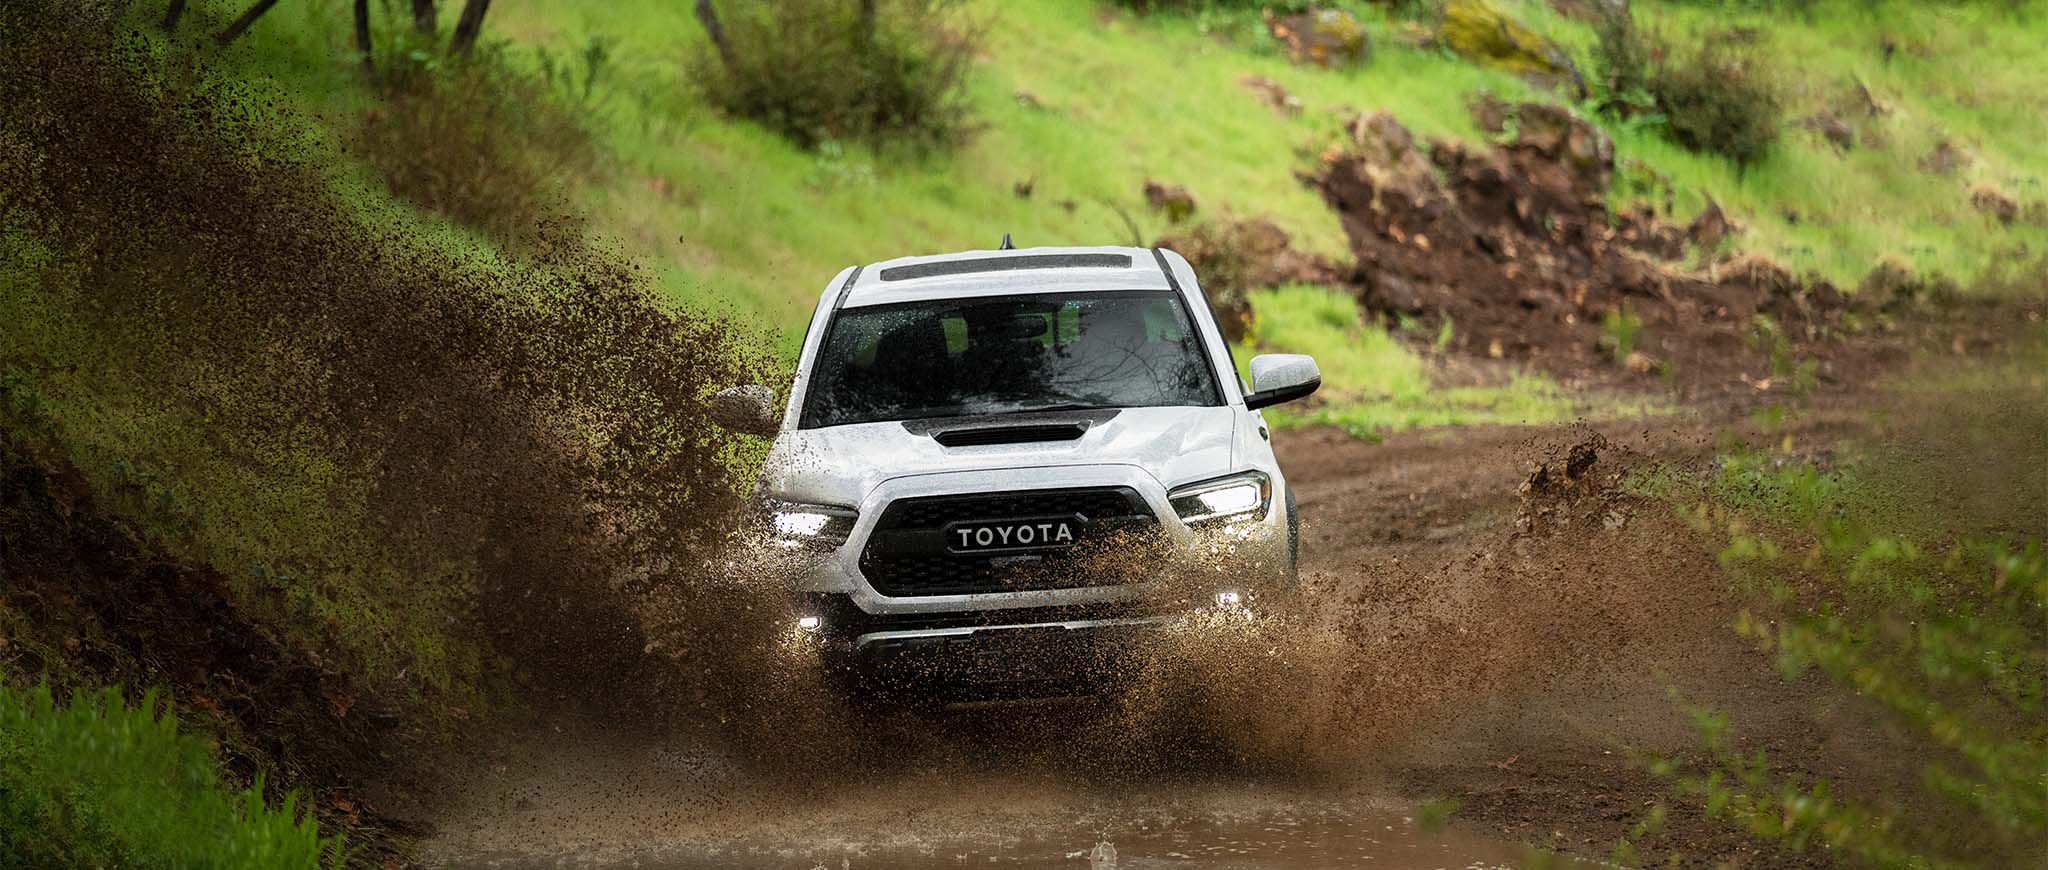 A Tacoma driving through mud.